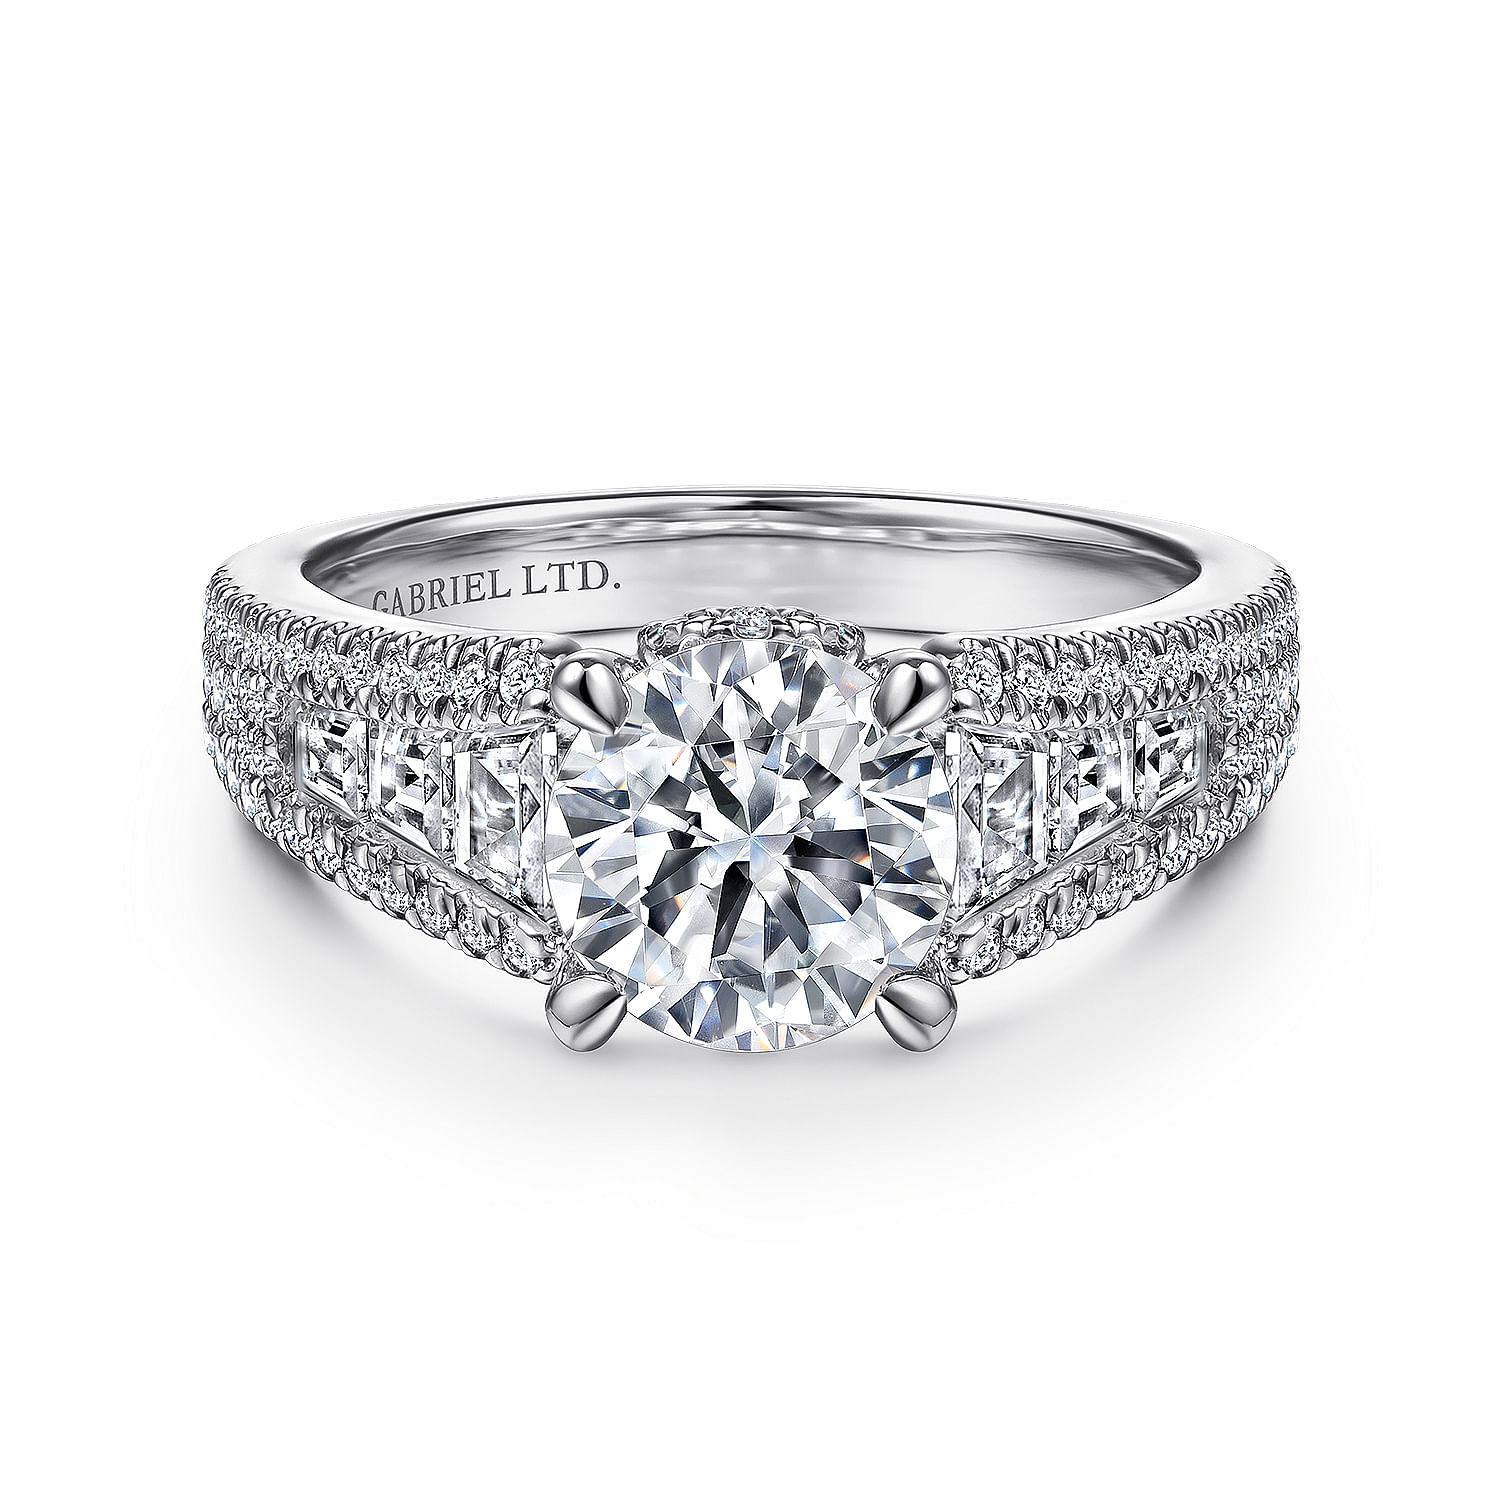 18k White Gold Round Diamond Engagement Ring